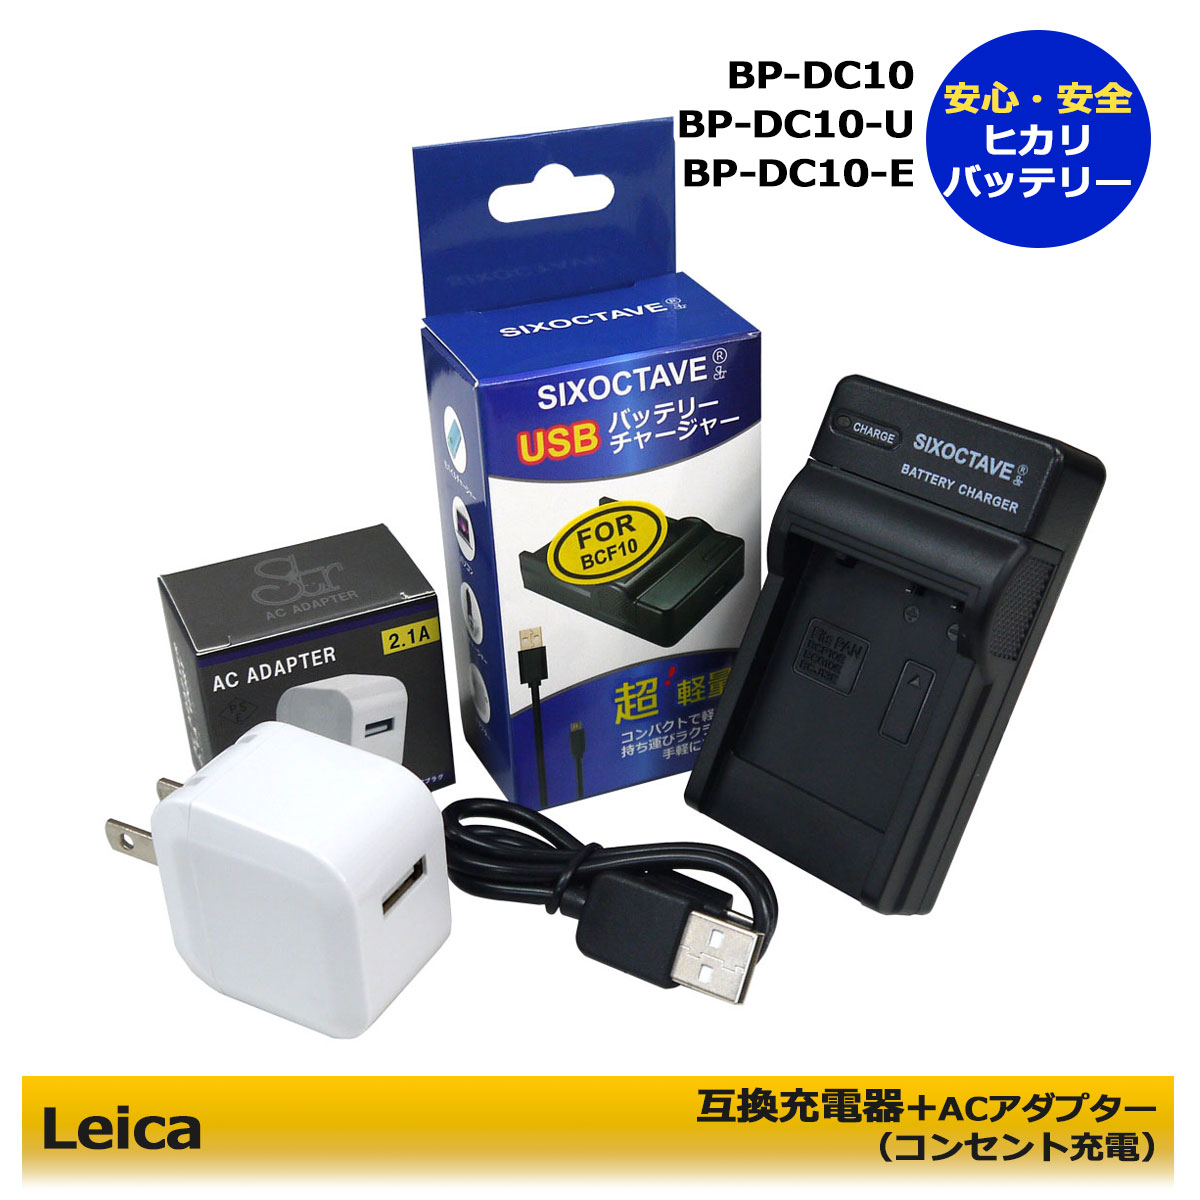 BP-DC10 / BP-DC10-U / BP-DC10-E 商品内容 互換充電器（USB充電式）1個 コンセント充電用　ACアダプター　1個 ※バッテリー本体や箱は「DMW-BCJ13」となりますが、問題なくBP-DC10 としてご使用いただけます。 規格 入力：micro USB DC5V±5% 出力：DC 4.2V±5% 500mA 対応機種 ◆LEICA D-LUX5 D-LUX6 互換充電器：BC-DC10-E / BC-DC10-U 対応バッテリー：BP-DC10 / BP-DC10-U / BP-DC10-E 仕様 ●純正＆互換バッテリーも充電可能！ ●CEマーク（欧州連合安全規制）製品。 ●本製品には過電流保護、過充電防止、過放電防止の保護回路が内蔵。 ●ご購入日より6ヶ月の安心保証付き！ ●保証：6ヶ月（PL保険（生産物賠償責任保険）加入済み。 ●赤ランプ【充電中】/青ランプ【充電完了】 ●USB端子がある機器に接続し、どこでも充電可能。 ●軽量で携帯に大変便利。 ●コンセント充電用ACアダプターセット